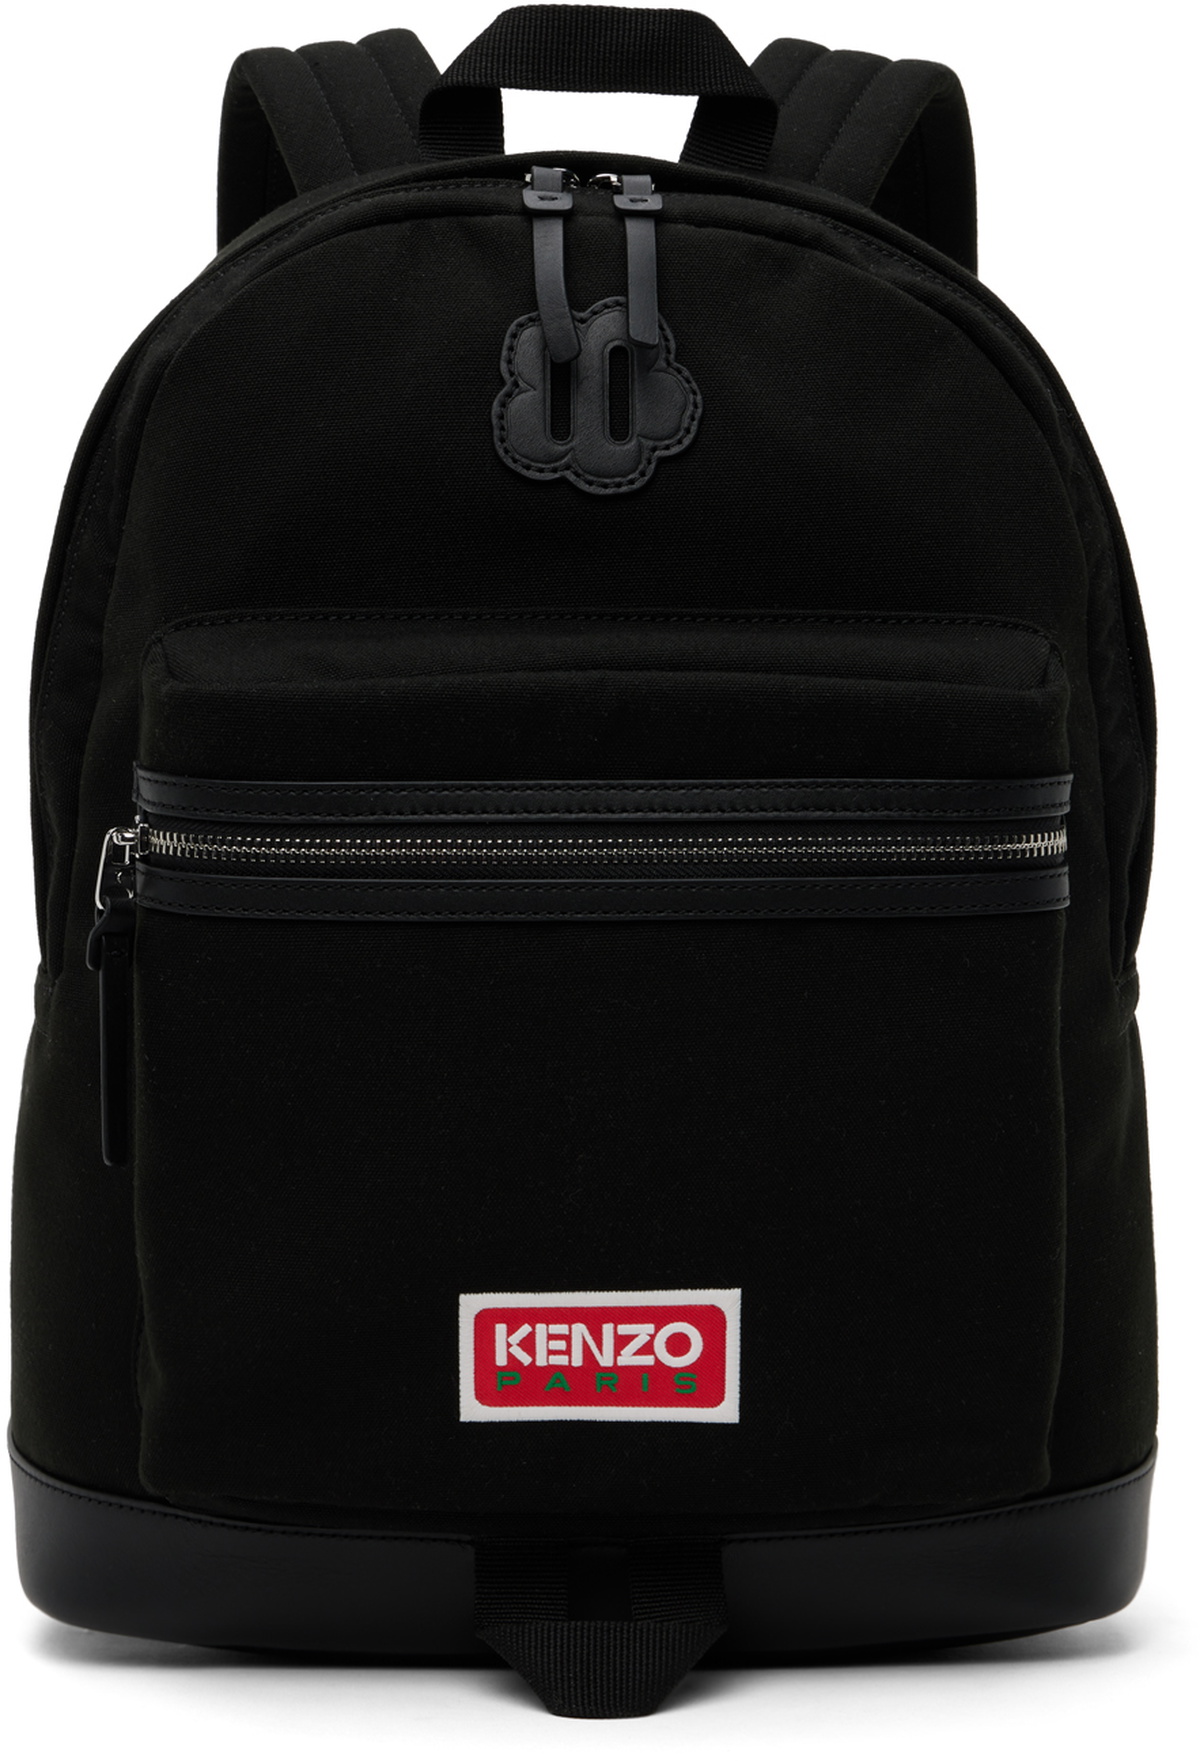 Kenzo Black Kenzo Paris Explore Backpack Kenzo